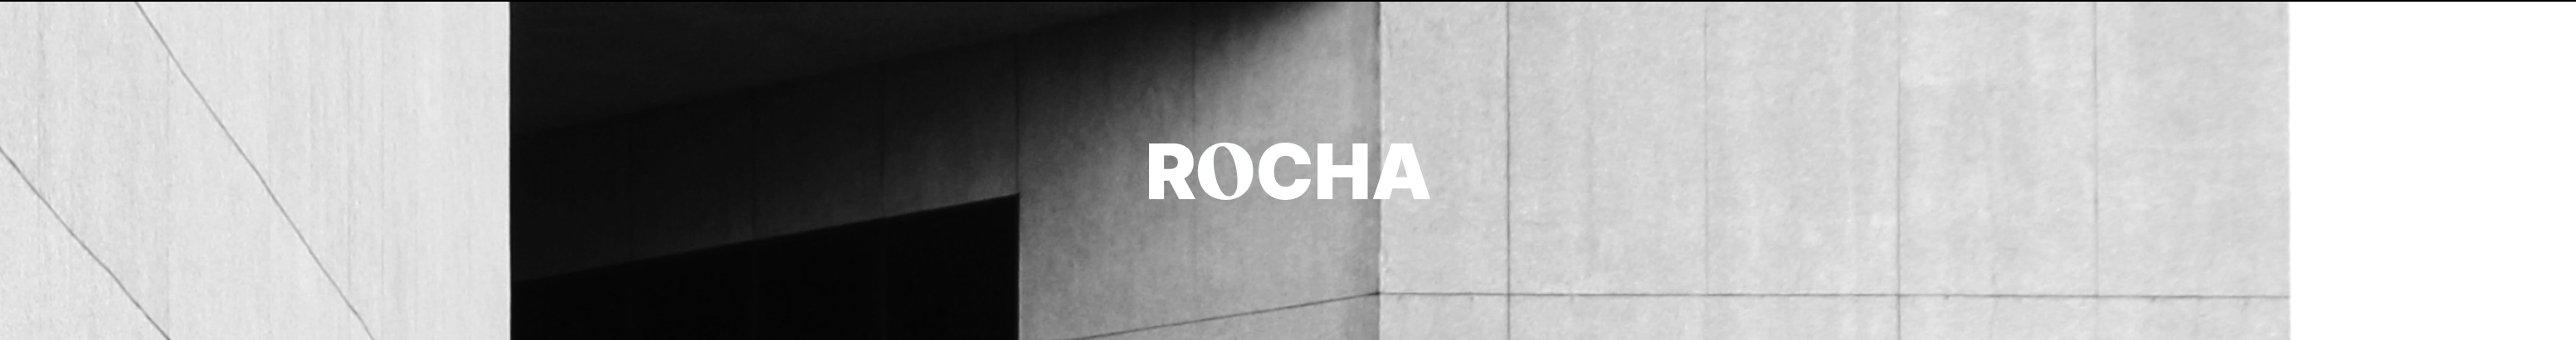 Thiago (ROCHA)'s profile banner